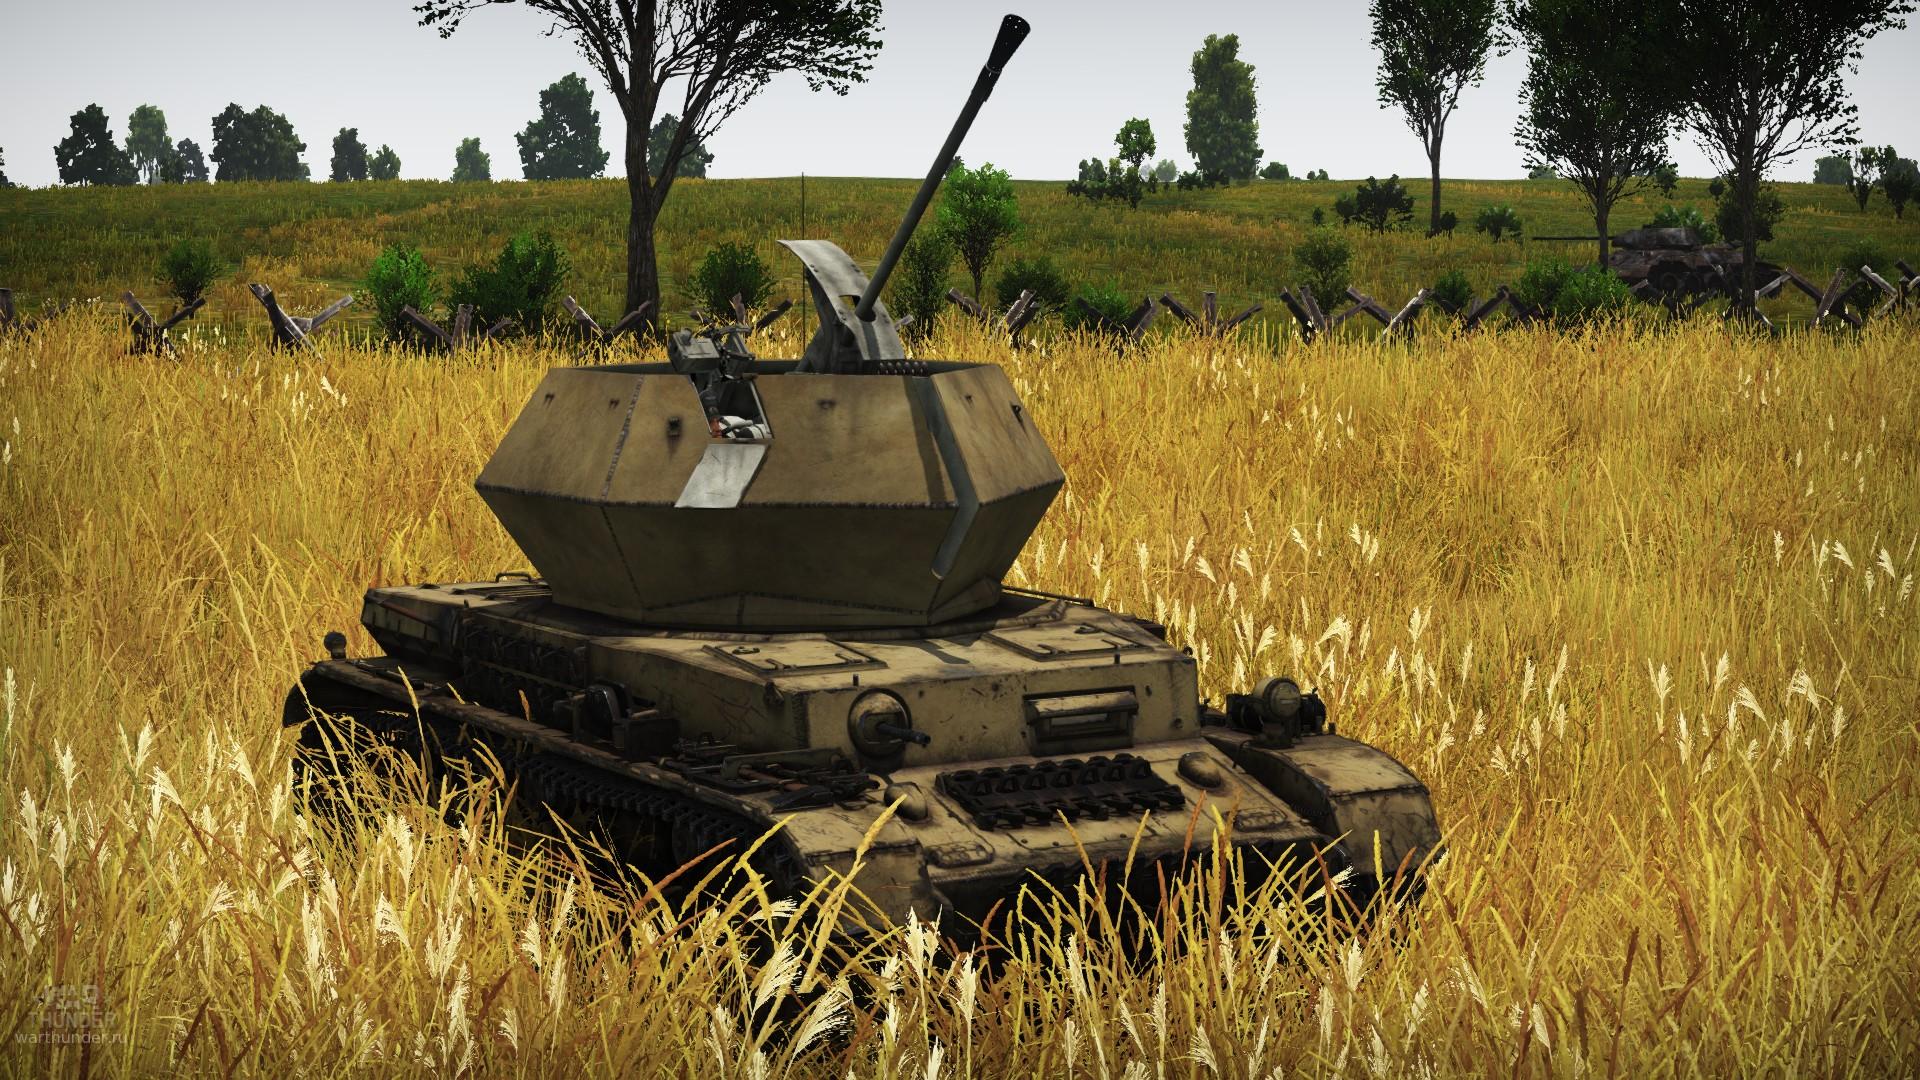 War Thunder vehicle in development. The Flakpanzer IV “Ostwind”